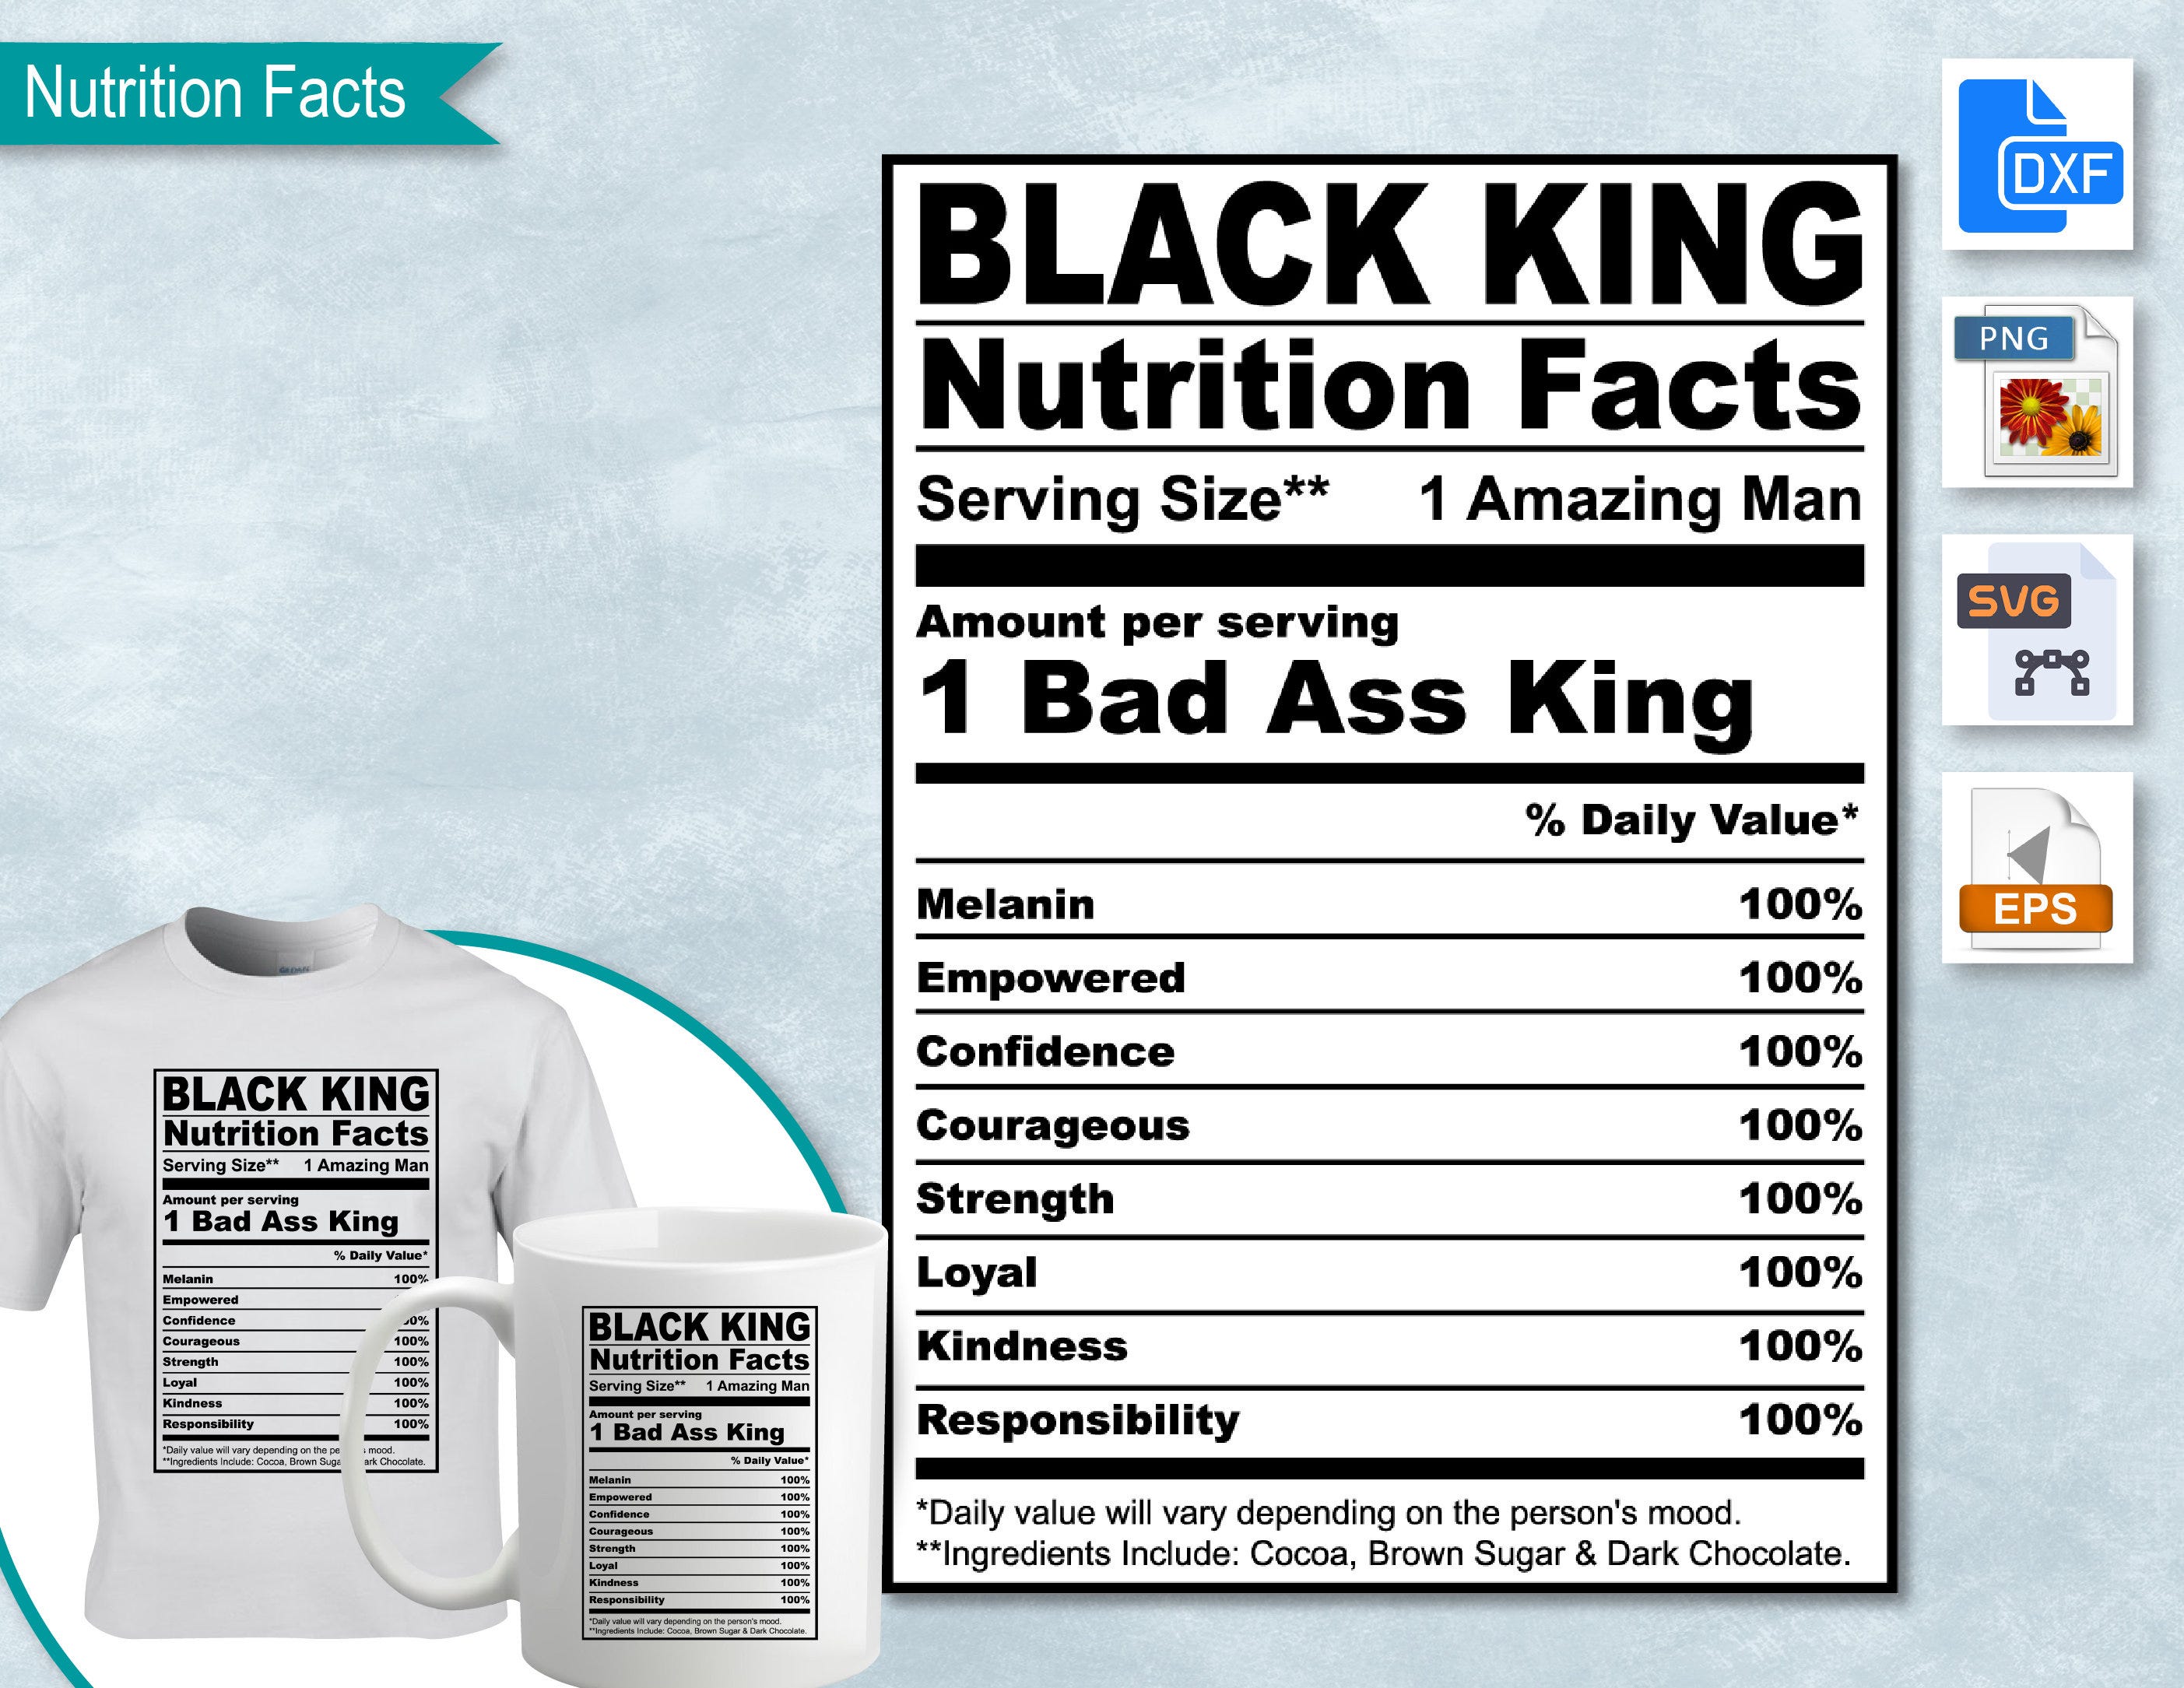 Black King Nutrition Facts, Black King, Black Man SVG Nutritional Fact Label Template, Printable DIY, Eps, PNG, SvG, DxF, Cricut, Silhouette